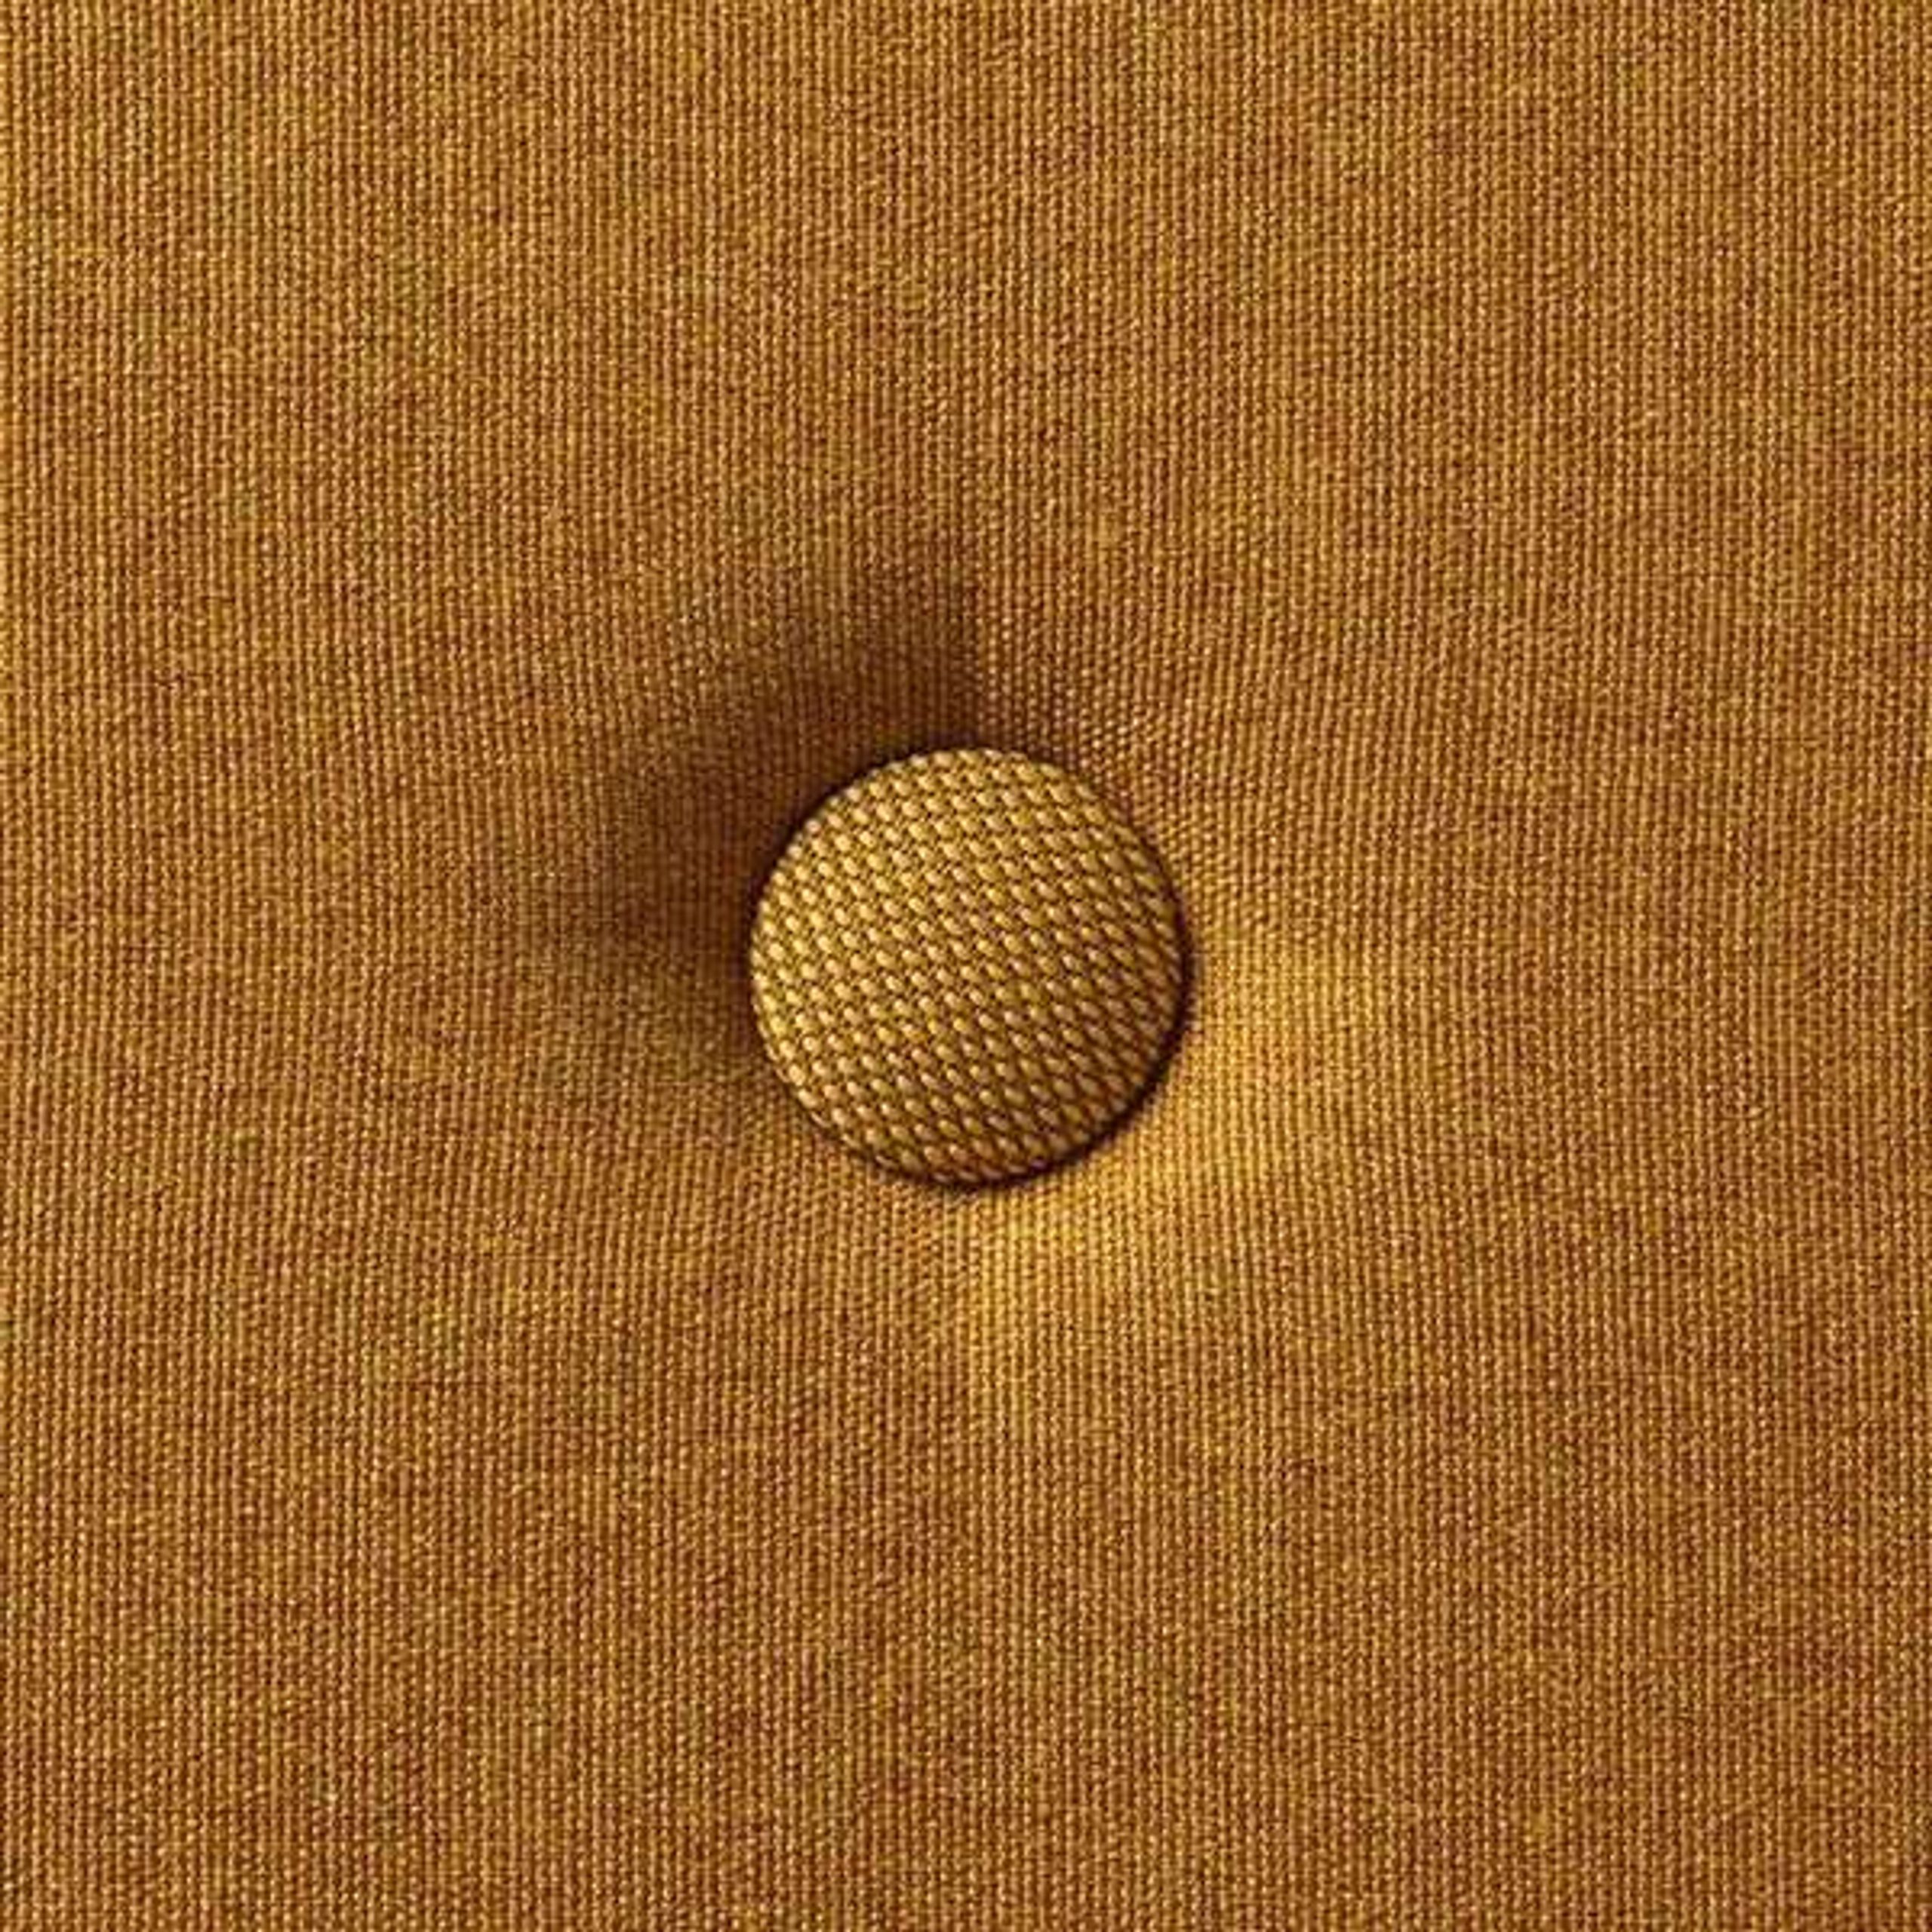 By KlipKlap - Matratze - KK 3 Fold Sofa Single - Mustard W. Mustard